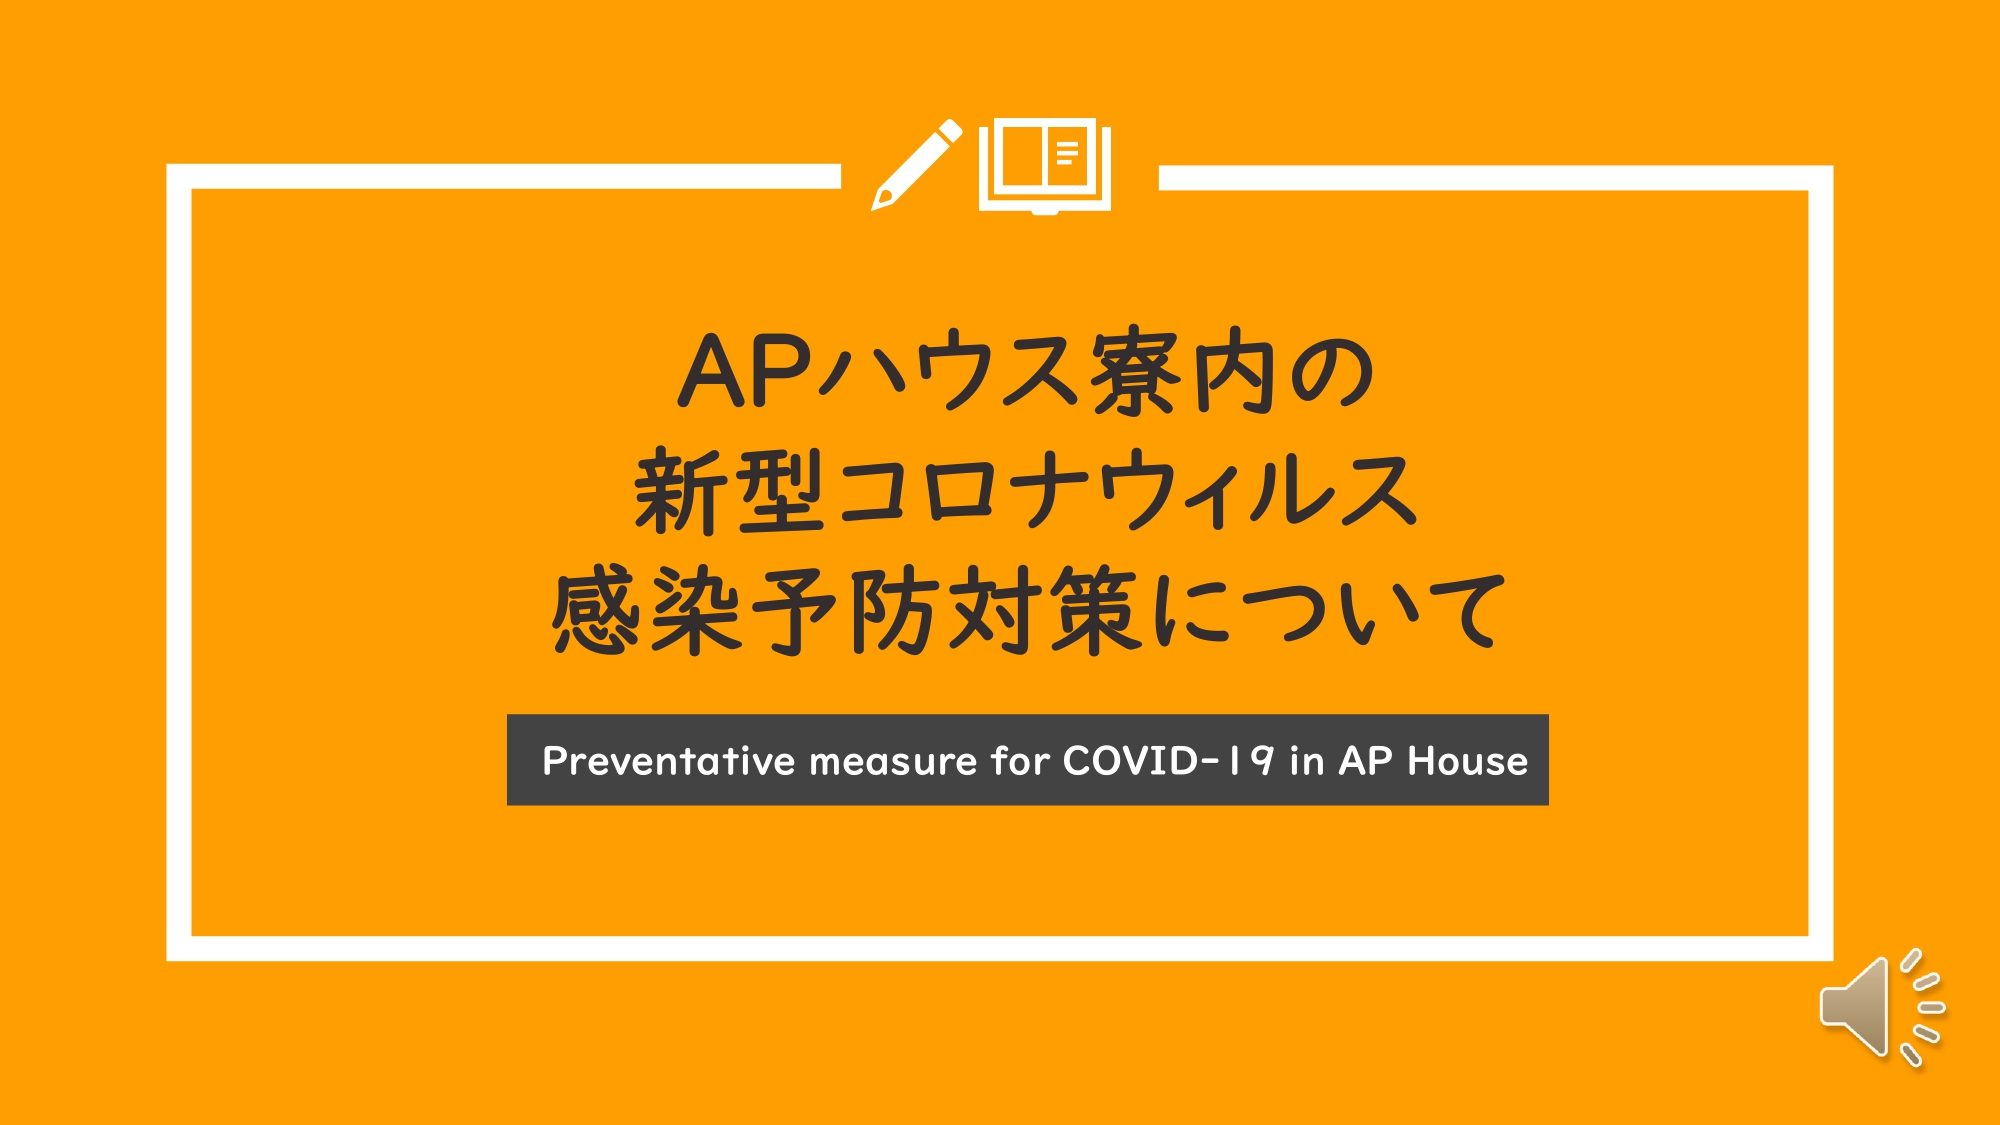 APハウス寮内の新型コロナウィルス感染予防対策について